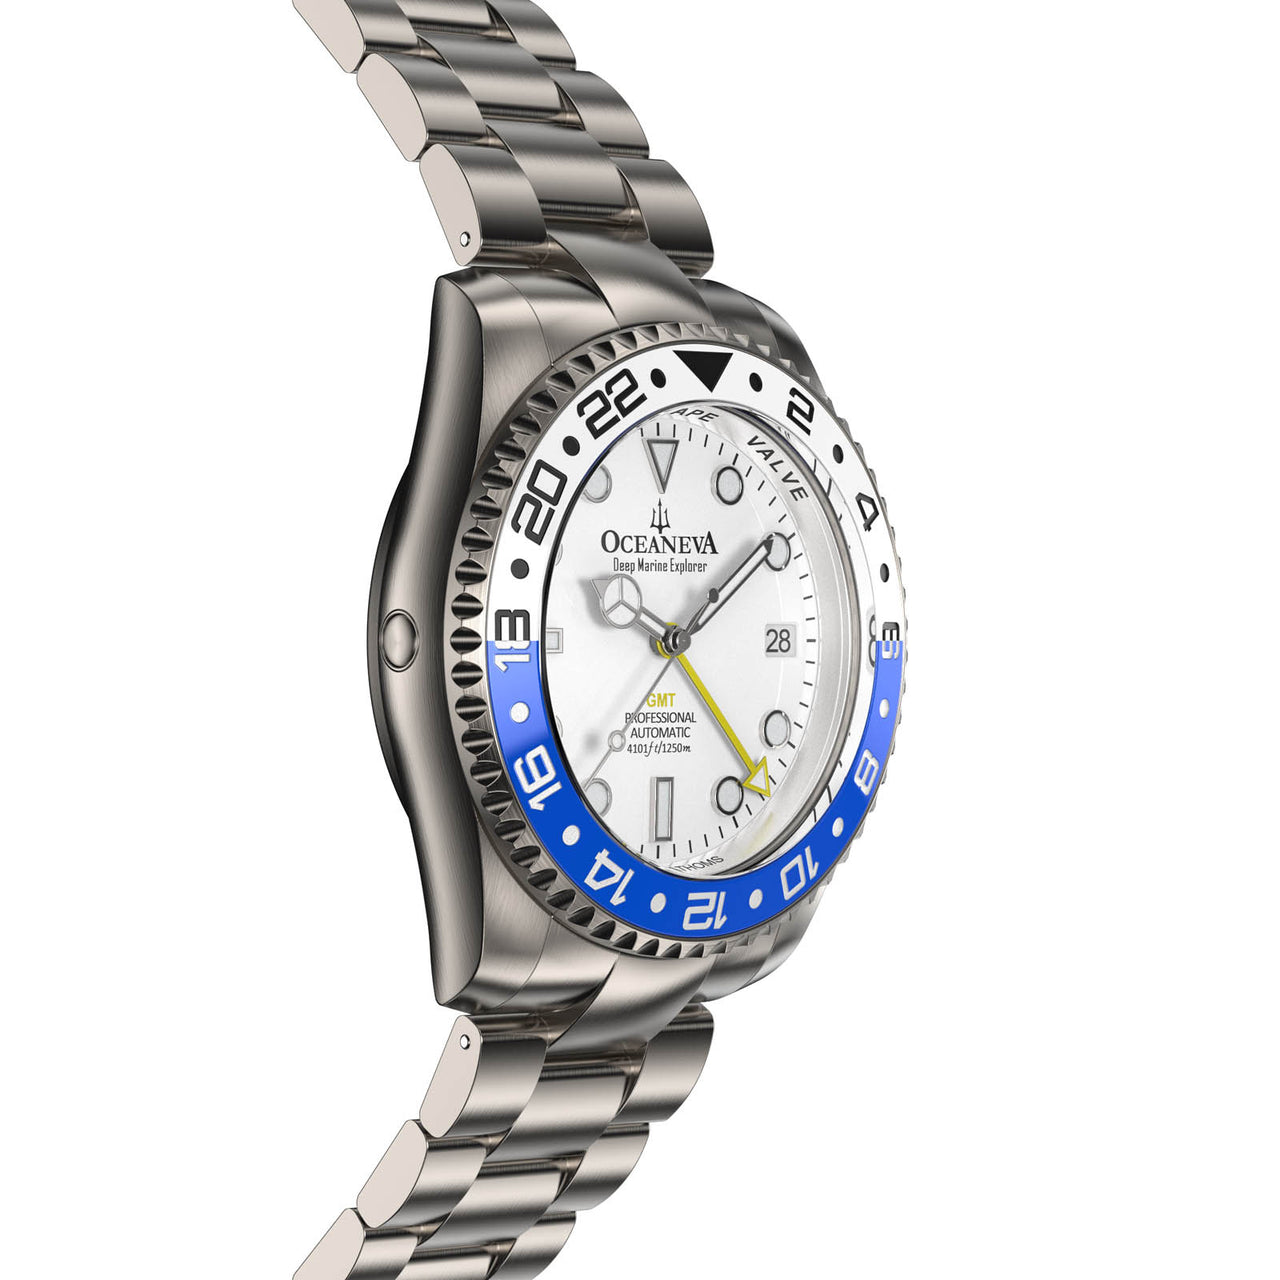 Side profile of Oceaneva Titanium GMT Watch